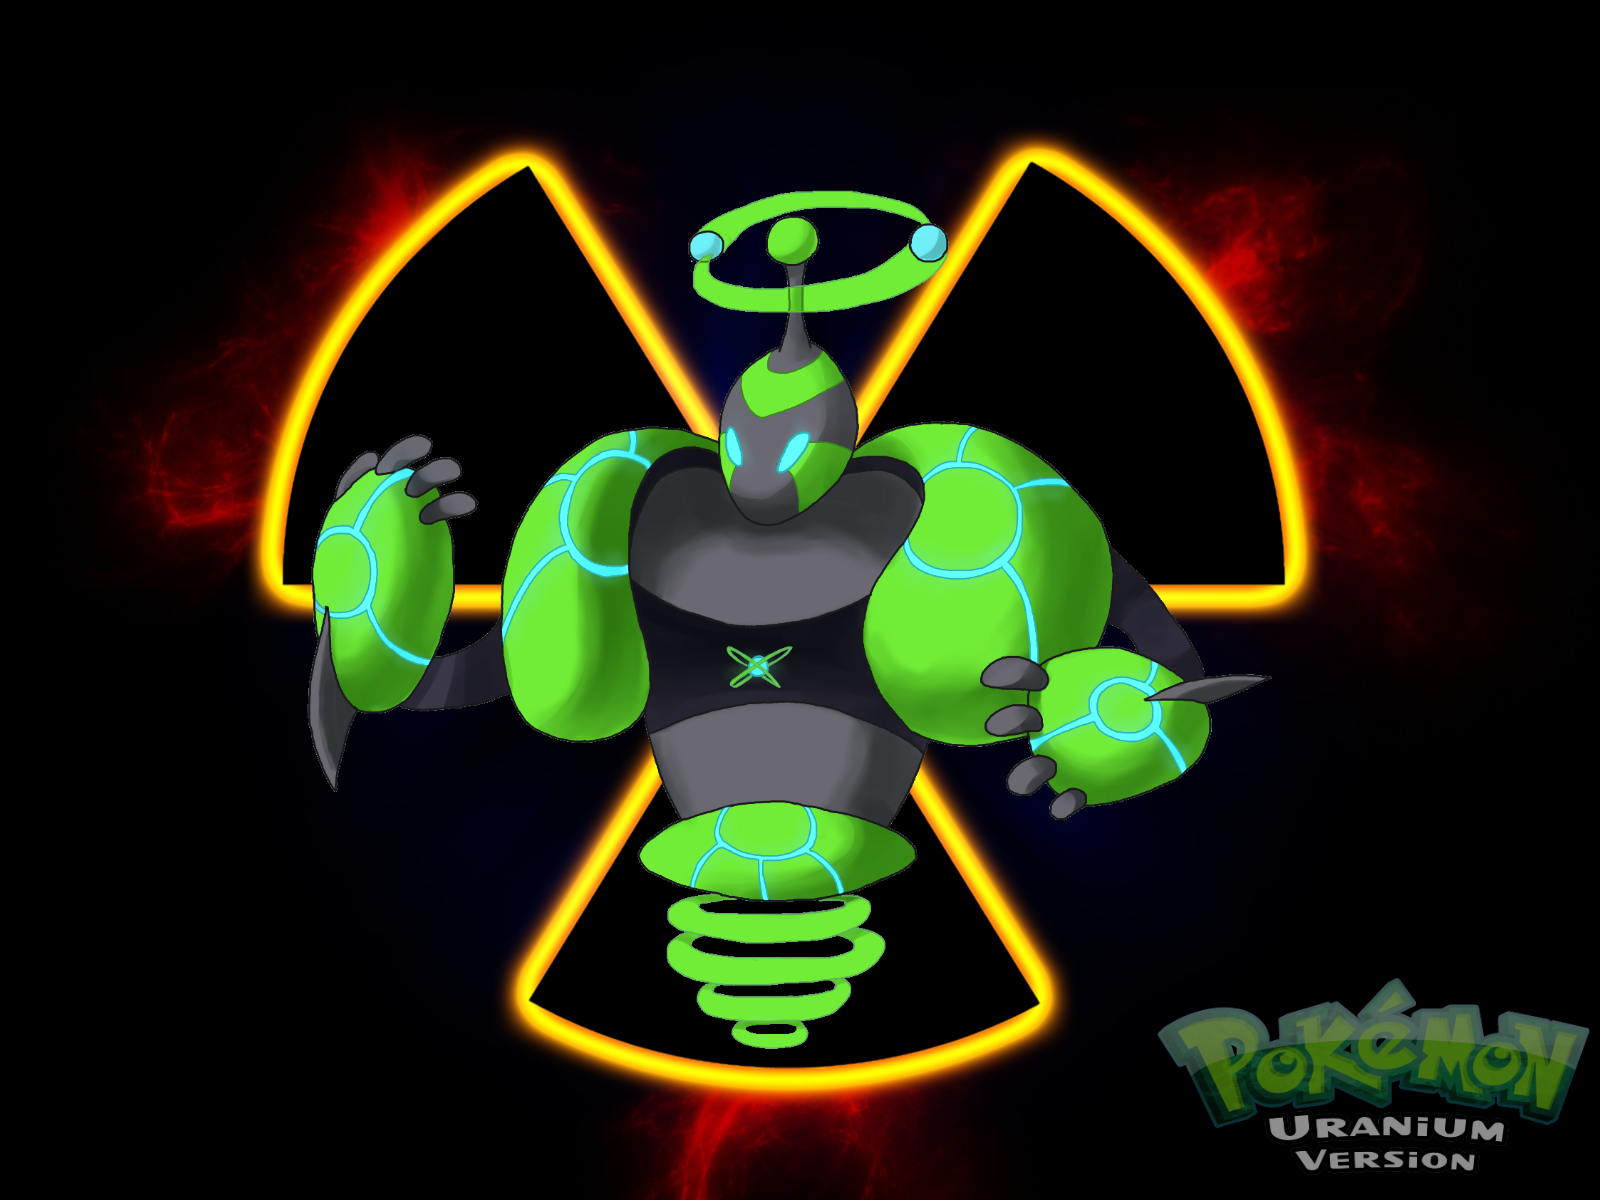 Pok Mon Uranium Promotional Art Mobygames